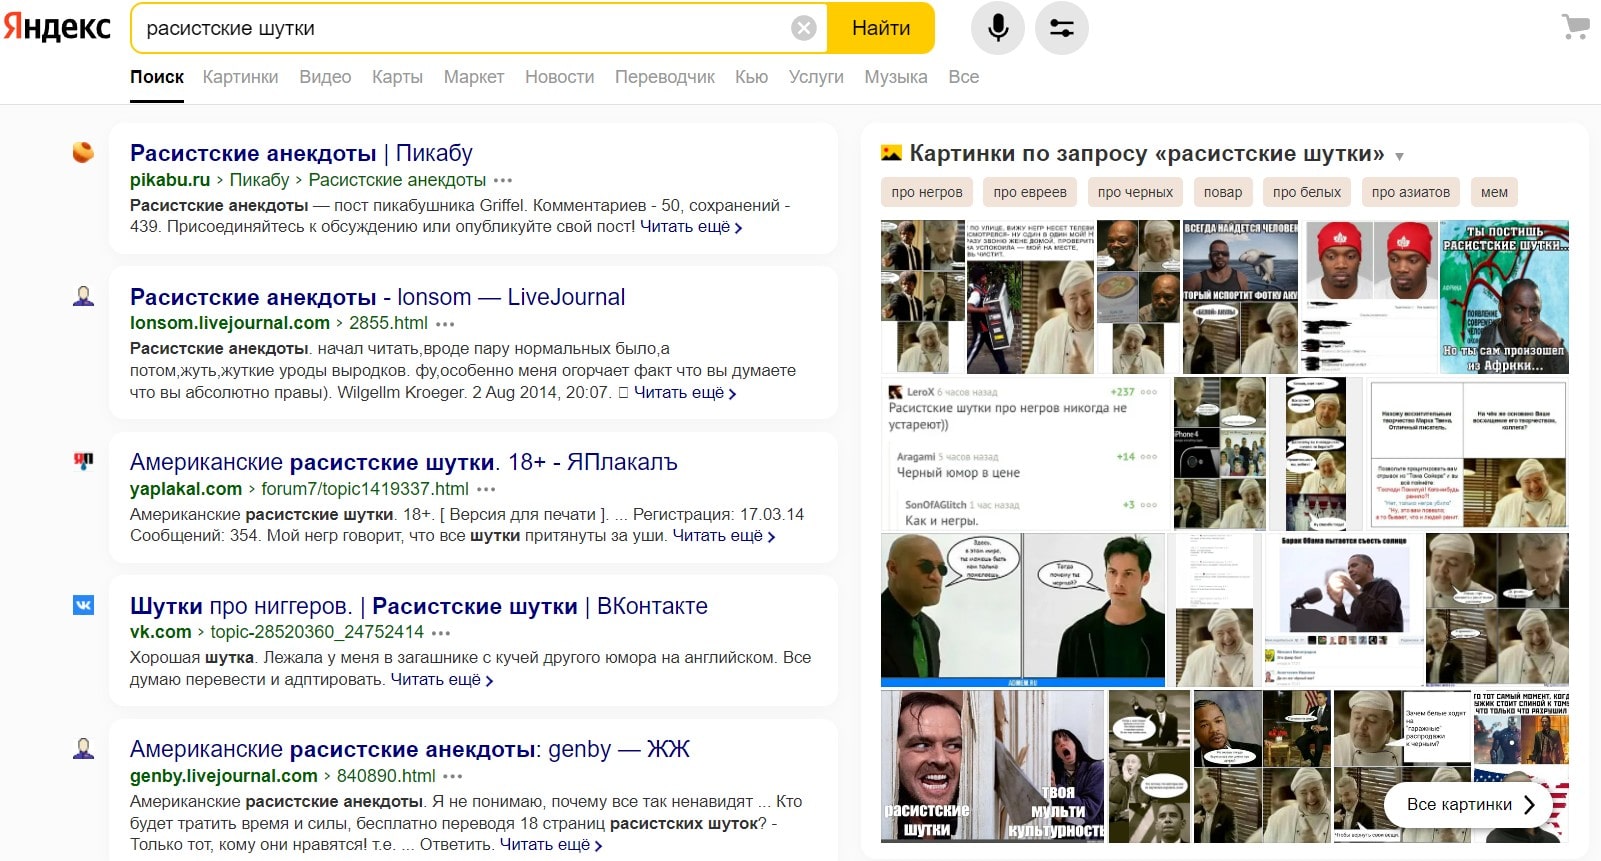 расистские анекдоты в Яндексе